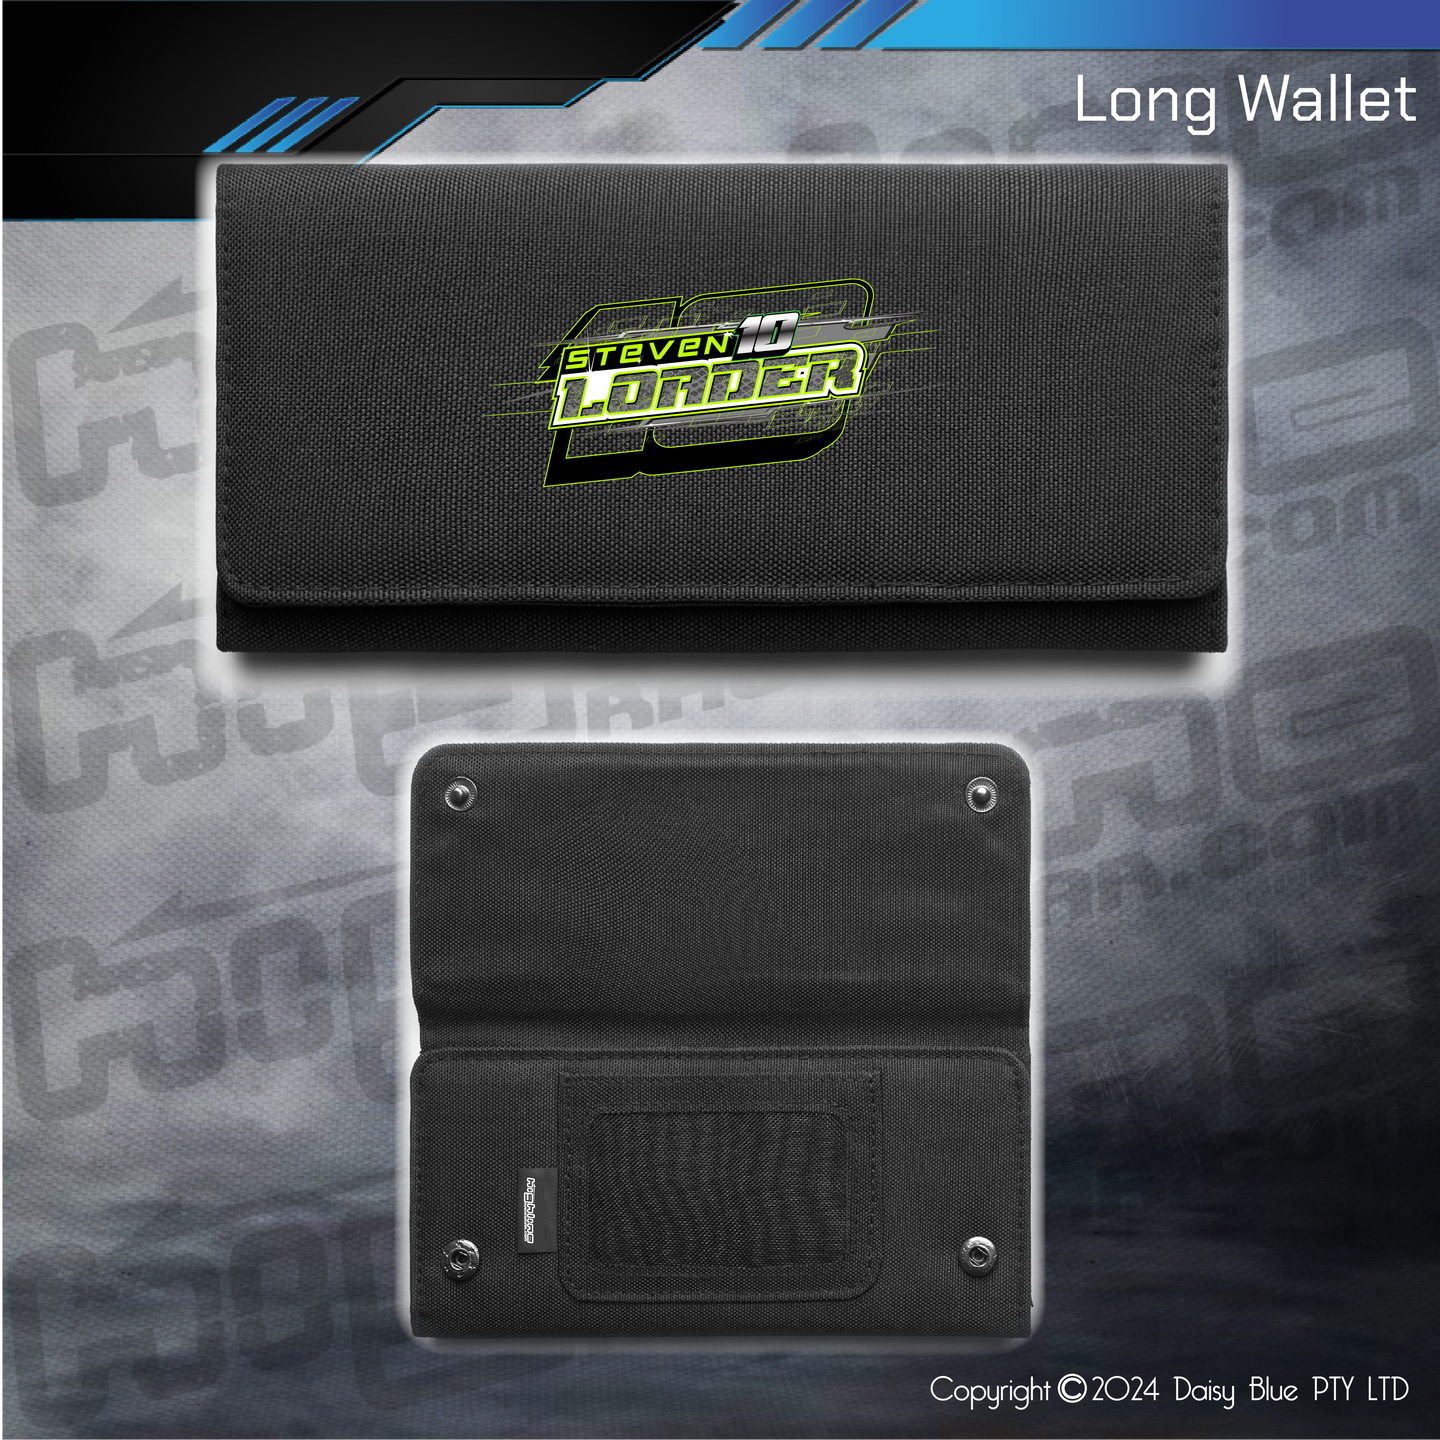 Long Wallet - Steve Loader Sports Sedan